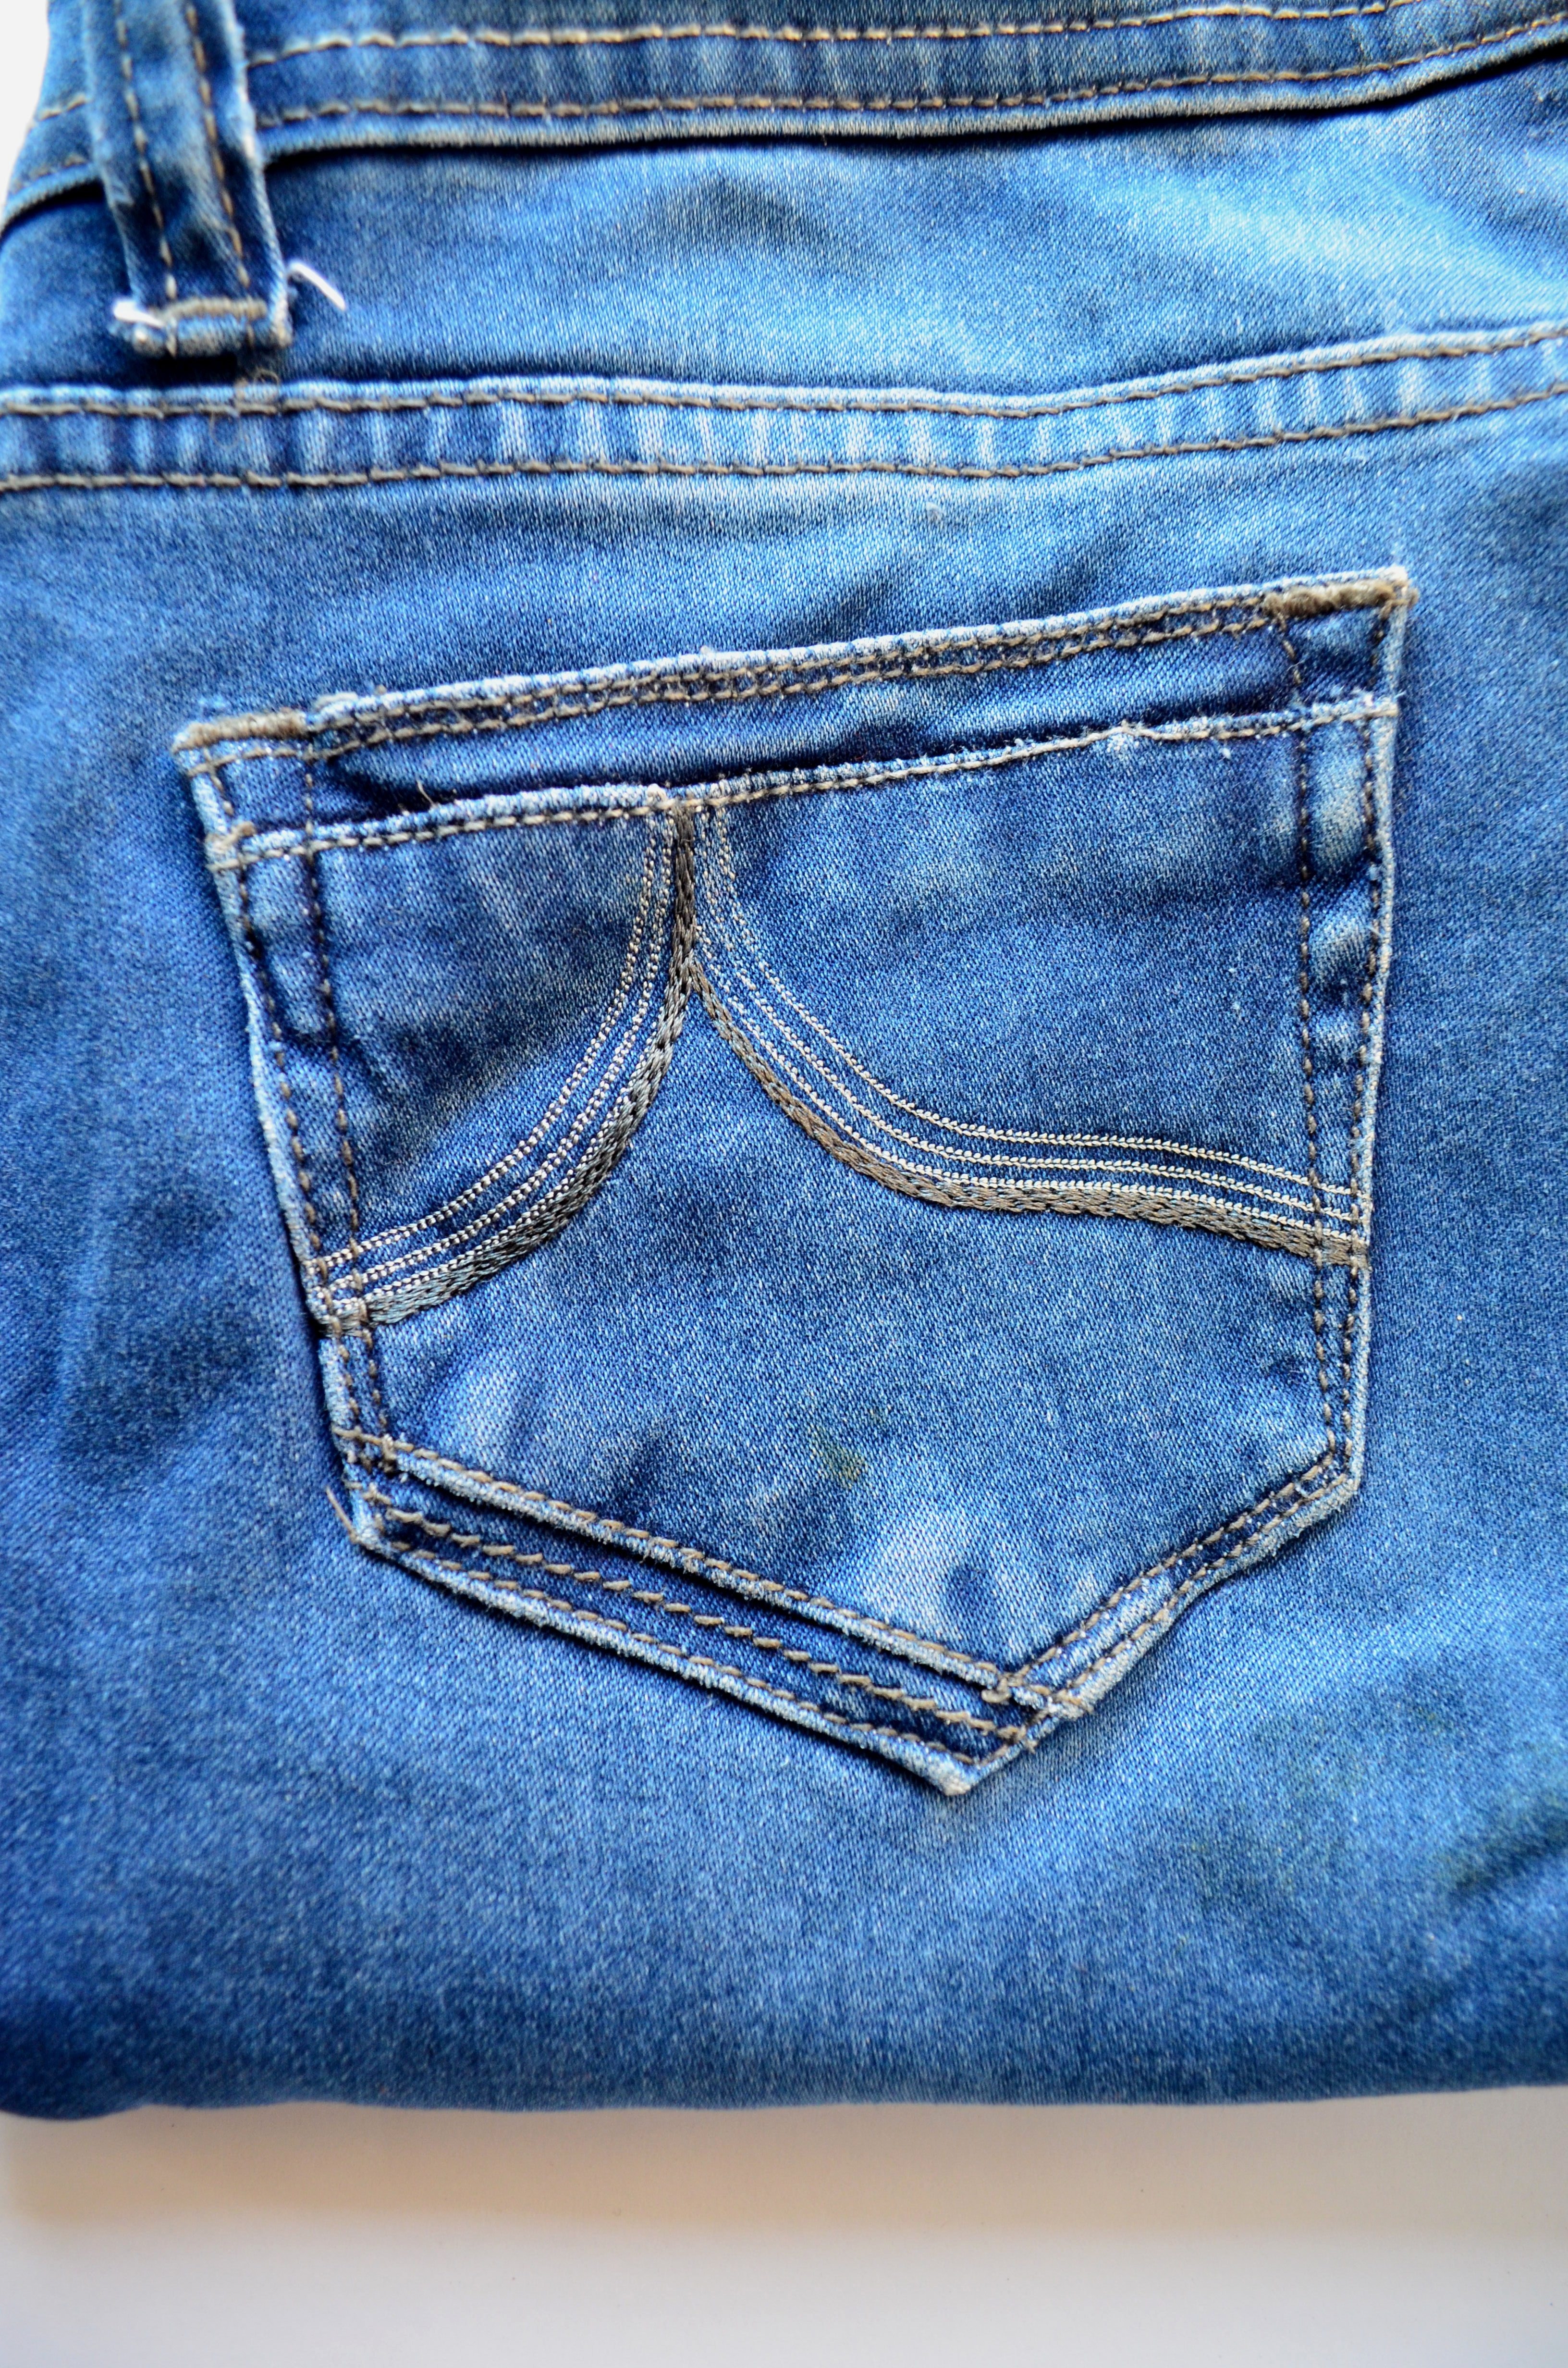 Blue, Jeans, Pocket, Fashion, Clothing, jeans, denim